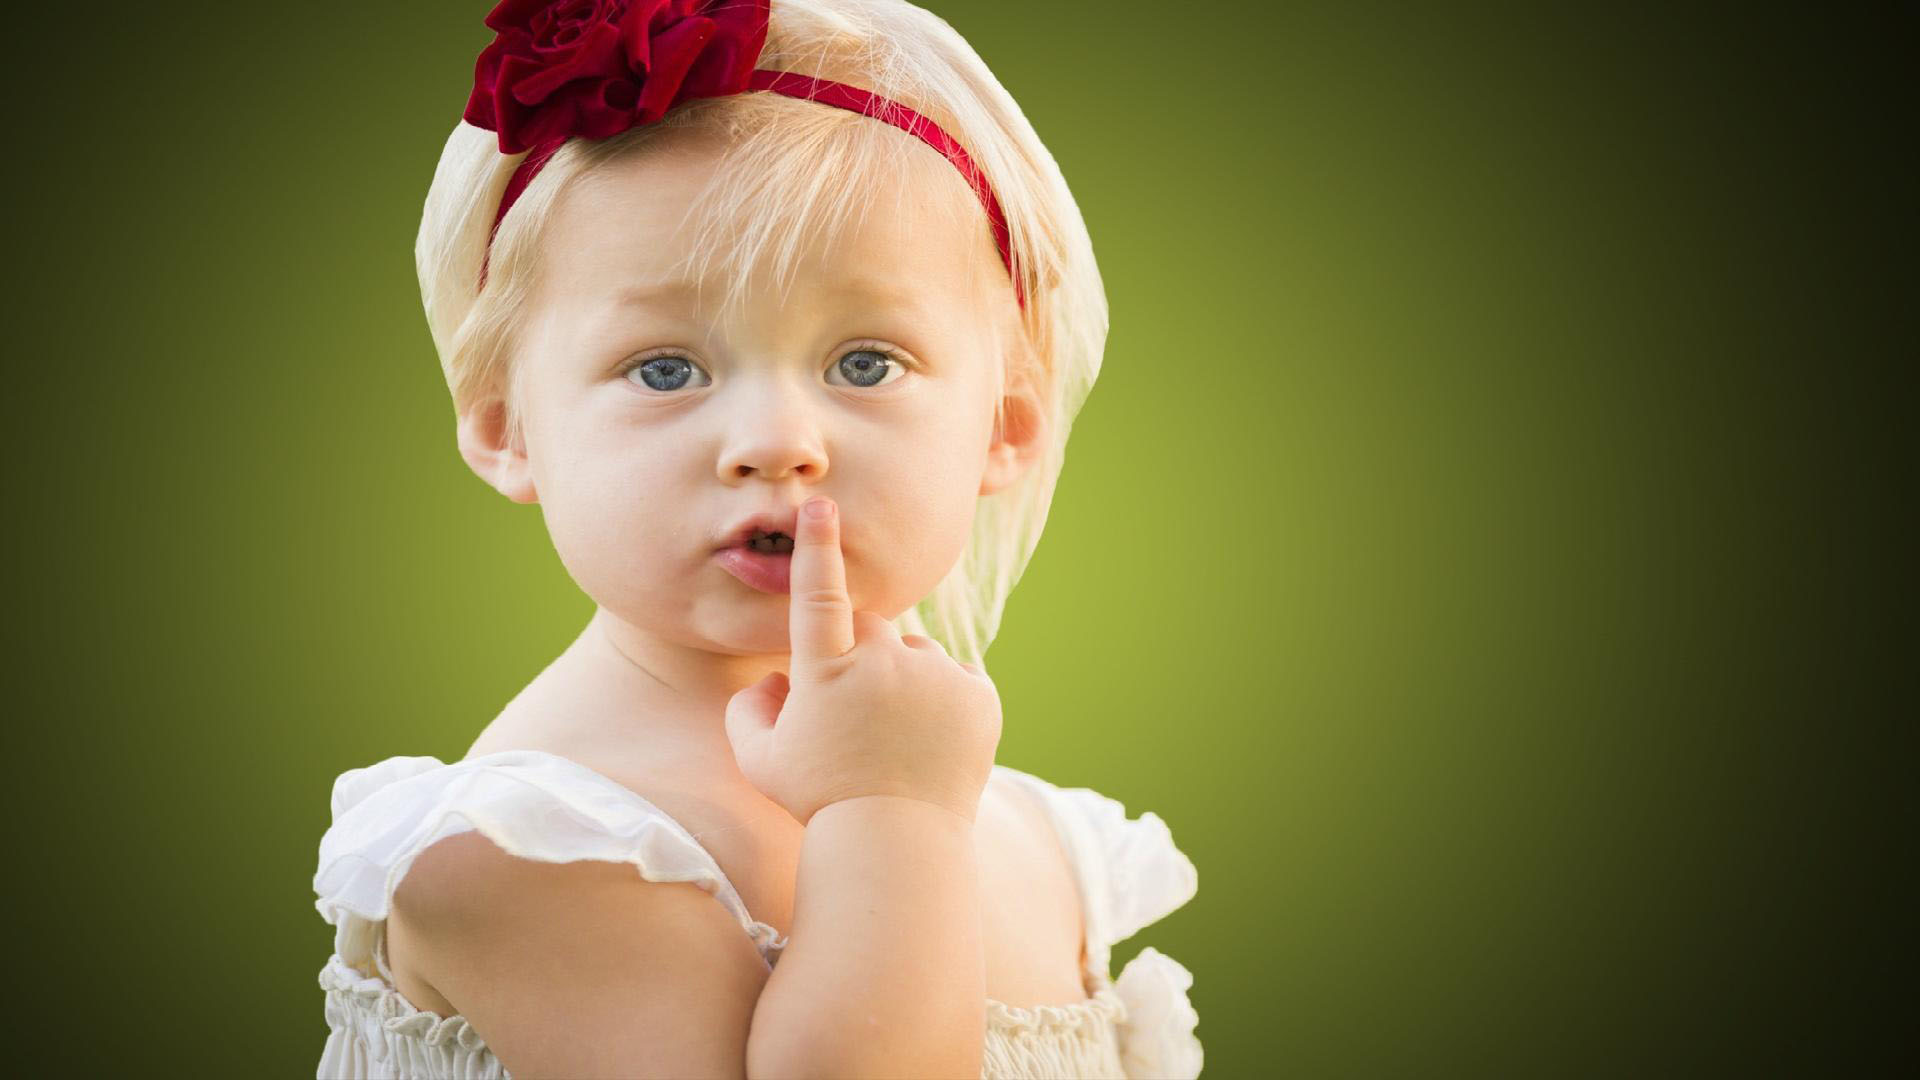 Cute Little Girl Baby Is Keeping Finger On Lips In Green Blur Wallpaper Wearing White Dress And Red Headband 2K Cute